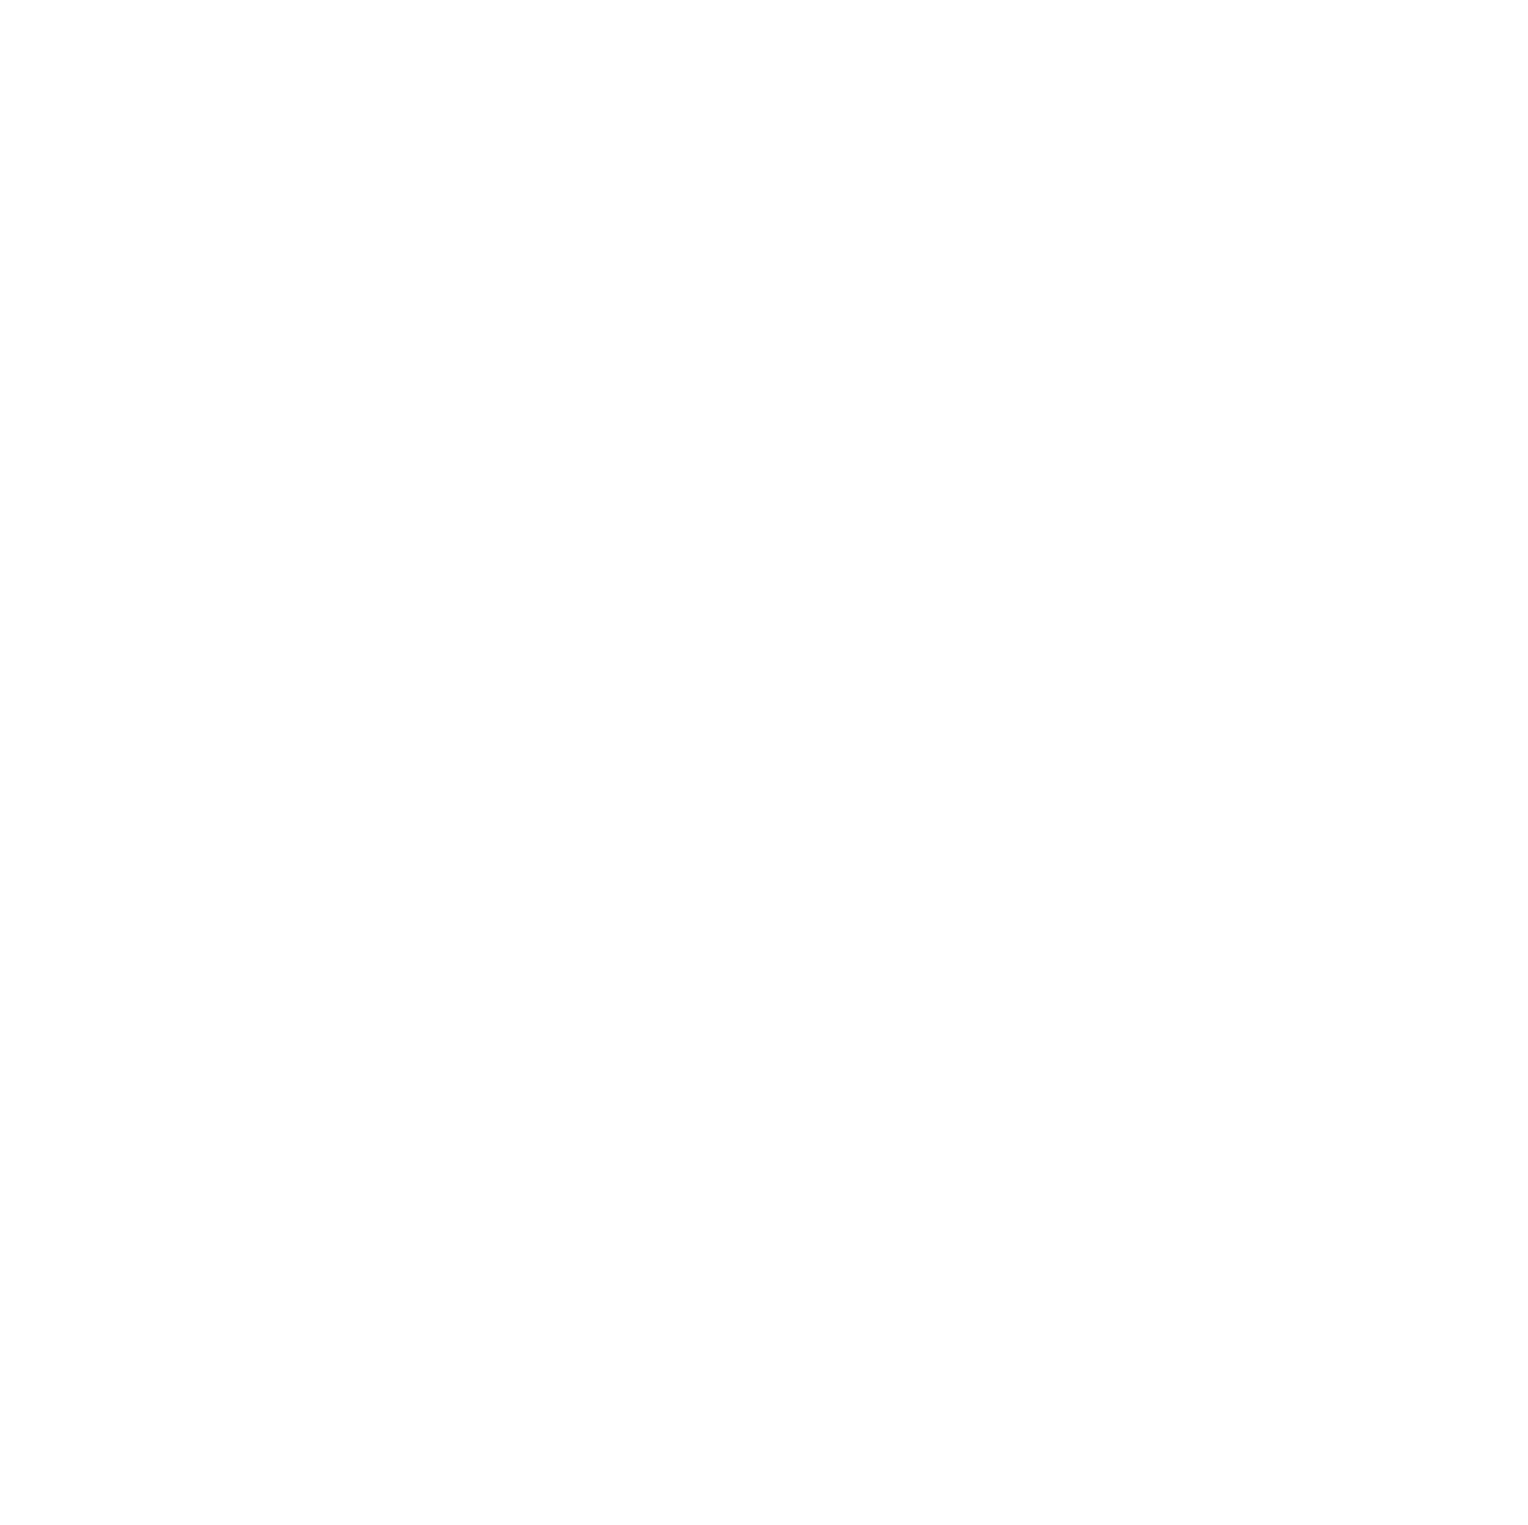 Rbb Fund logo for dark backgrounds (transparent PNG)